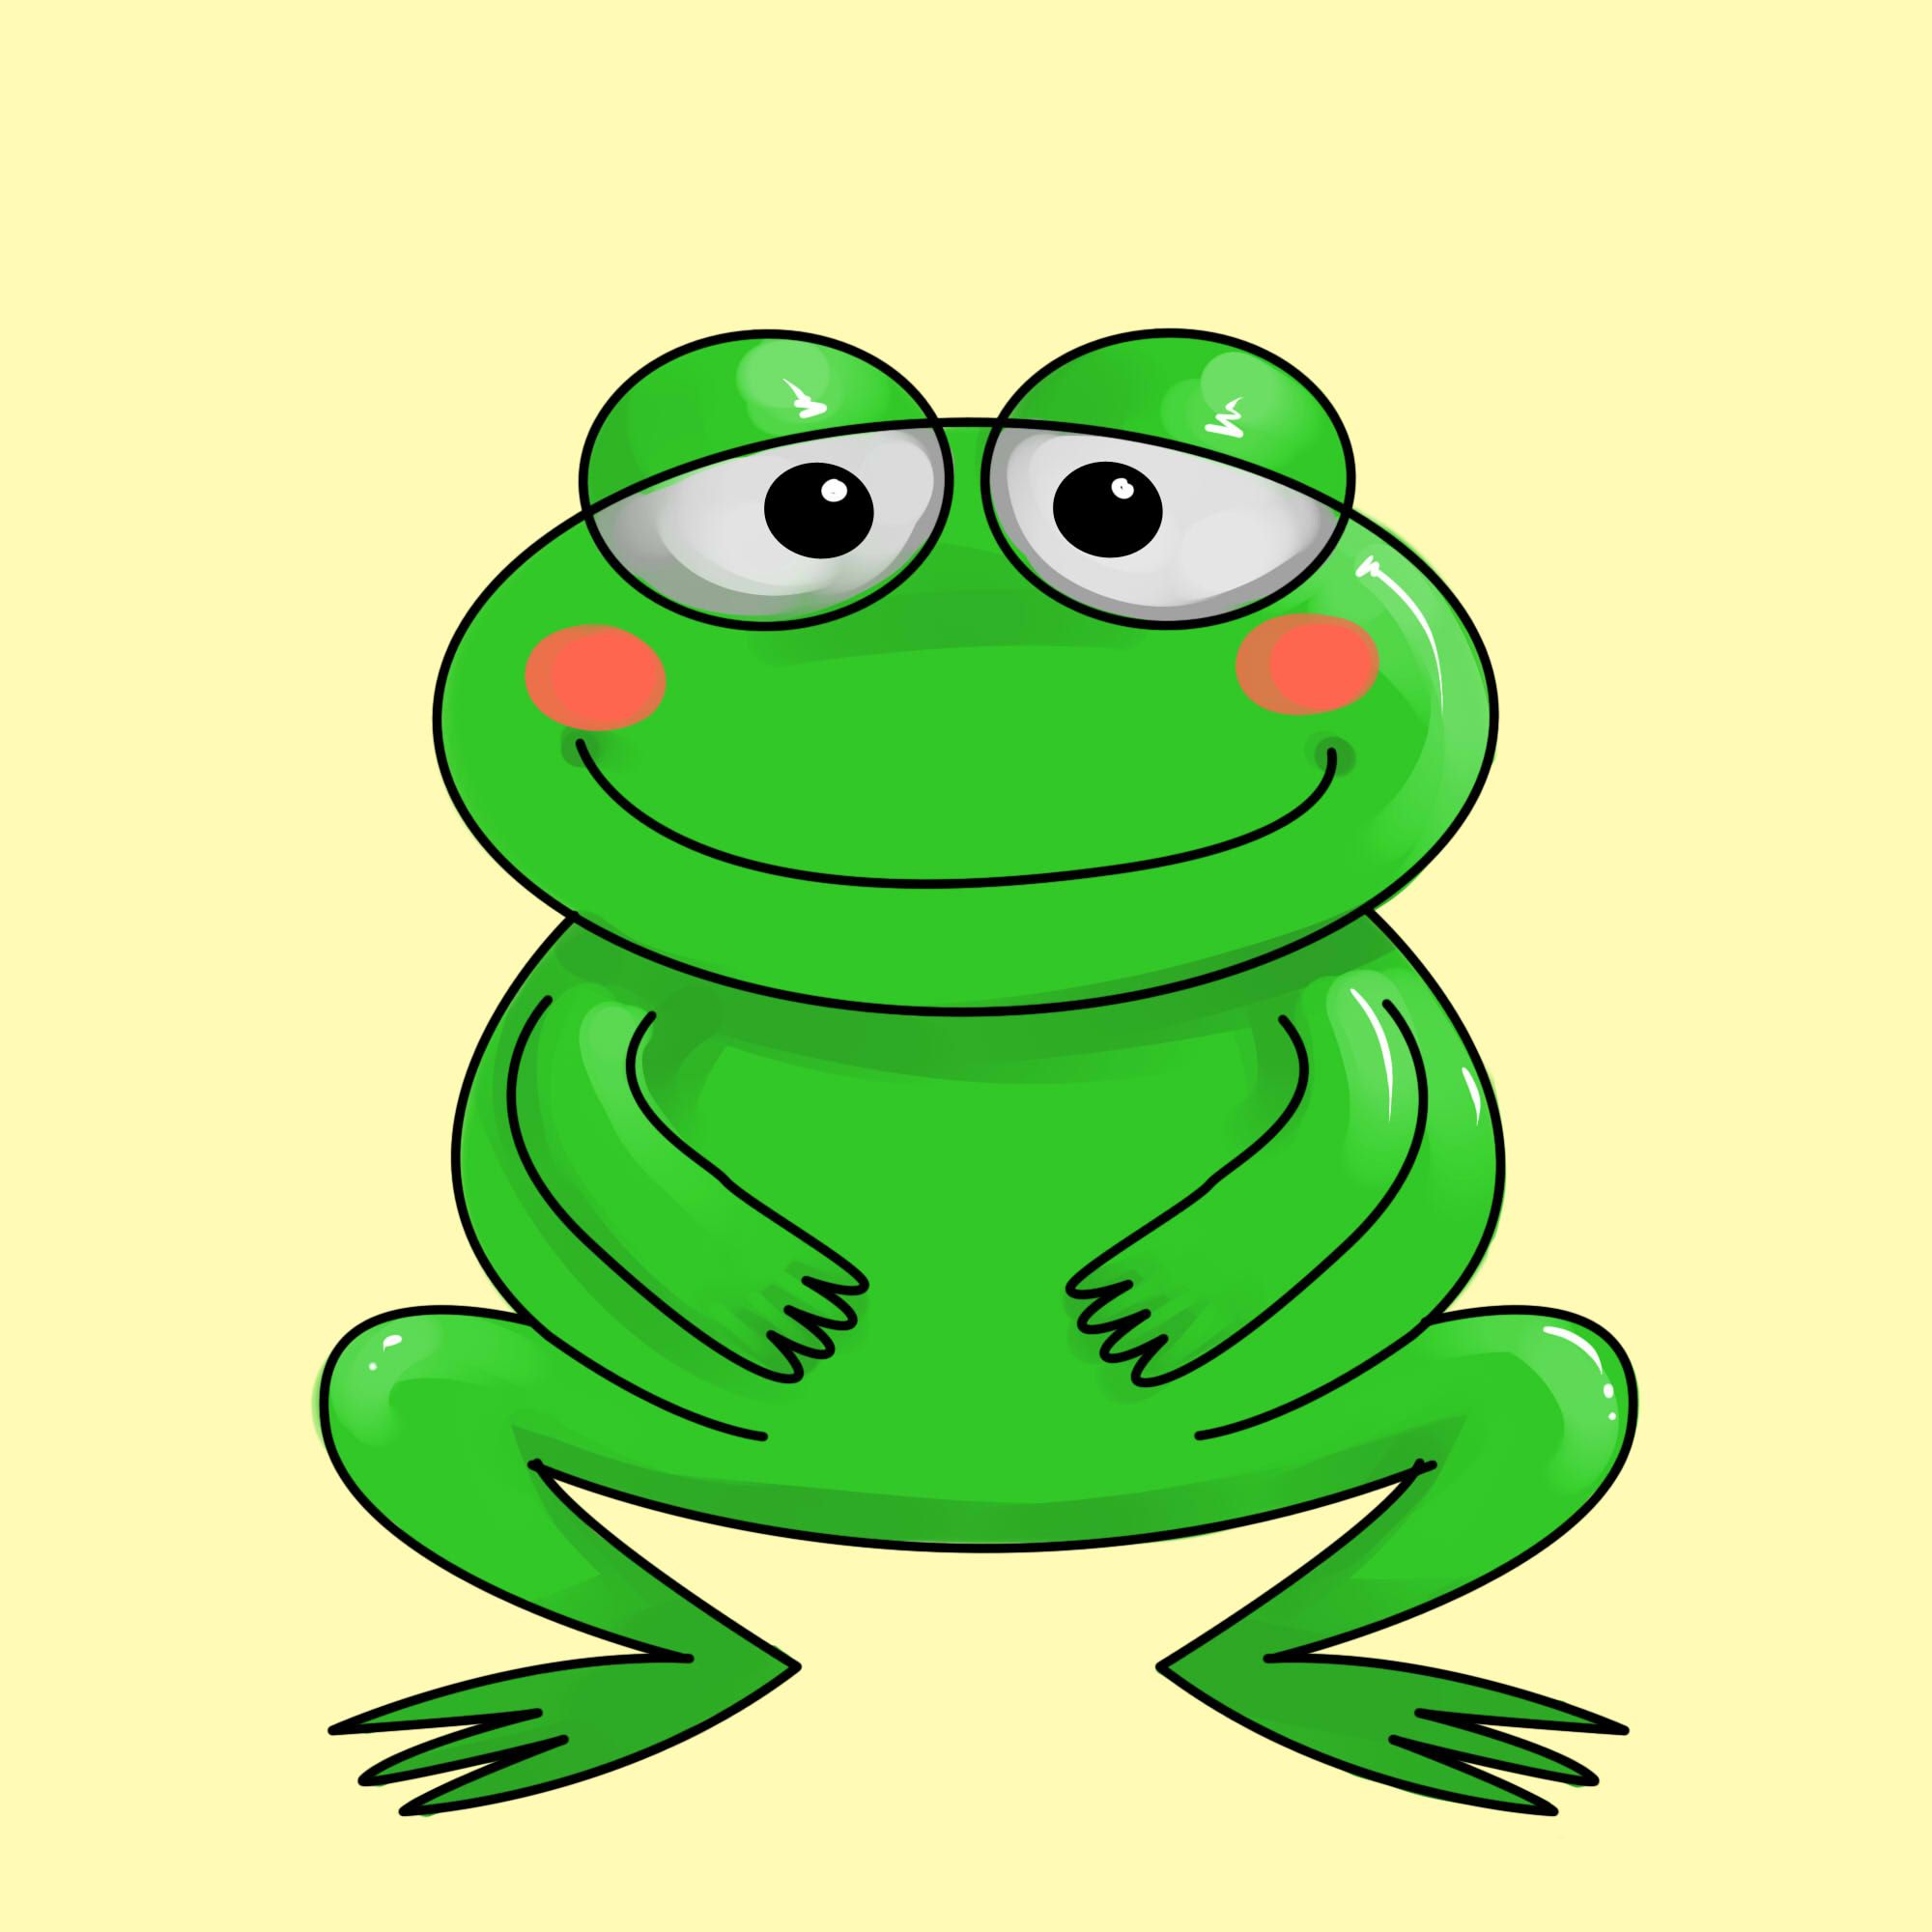 Cute frog Pattern Cartoon animal background  Stock Illustration  85357489  PIXTA